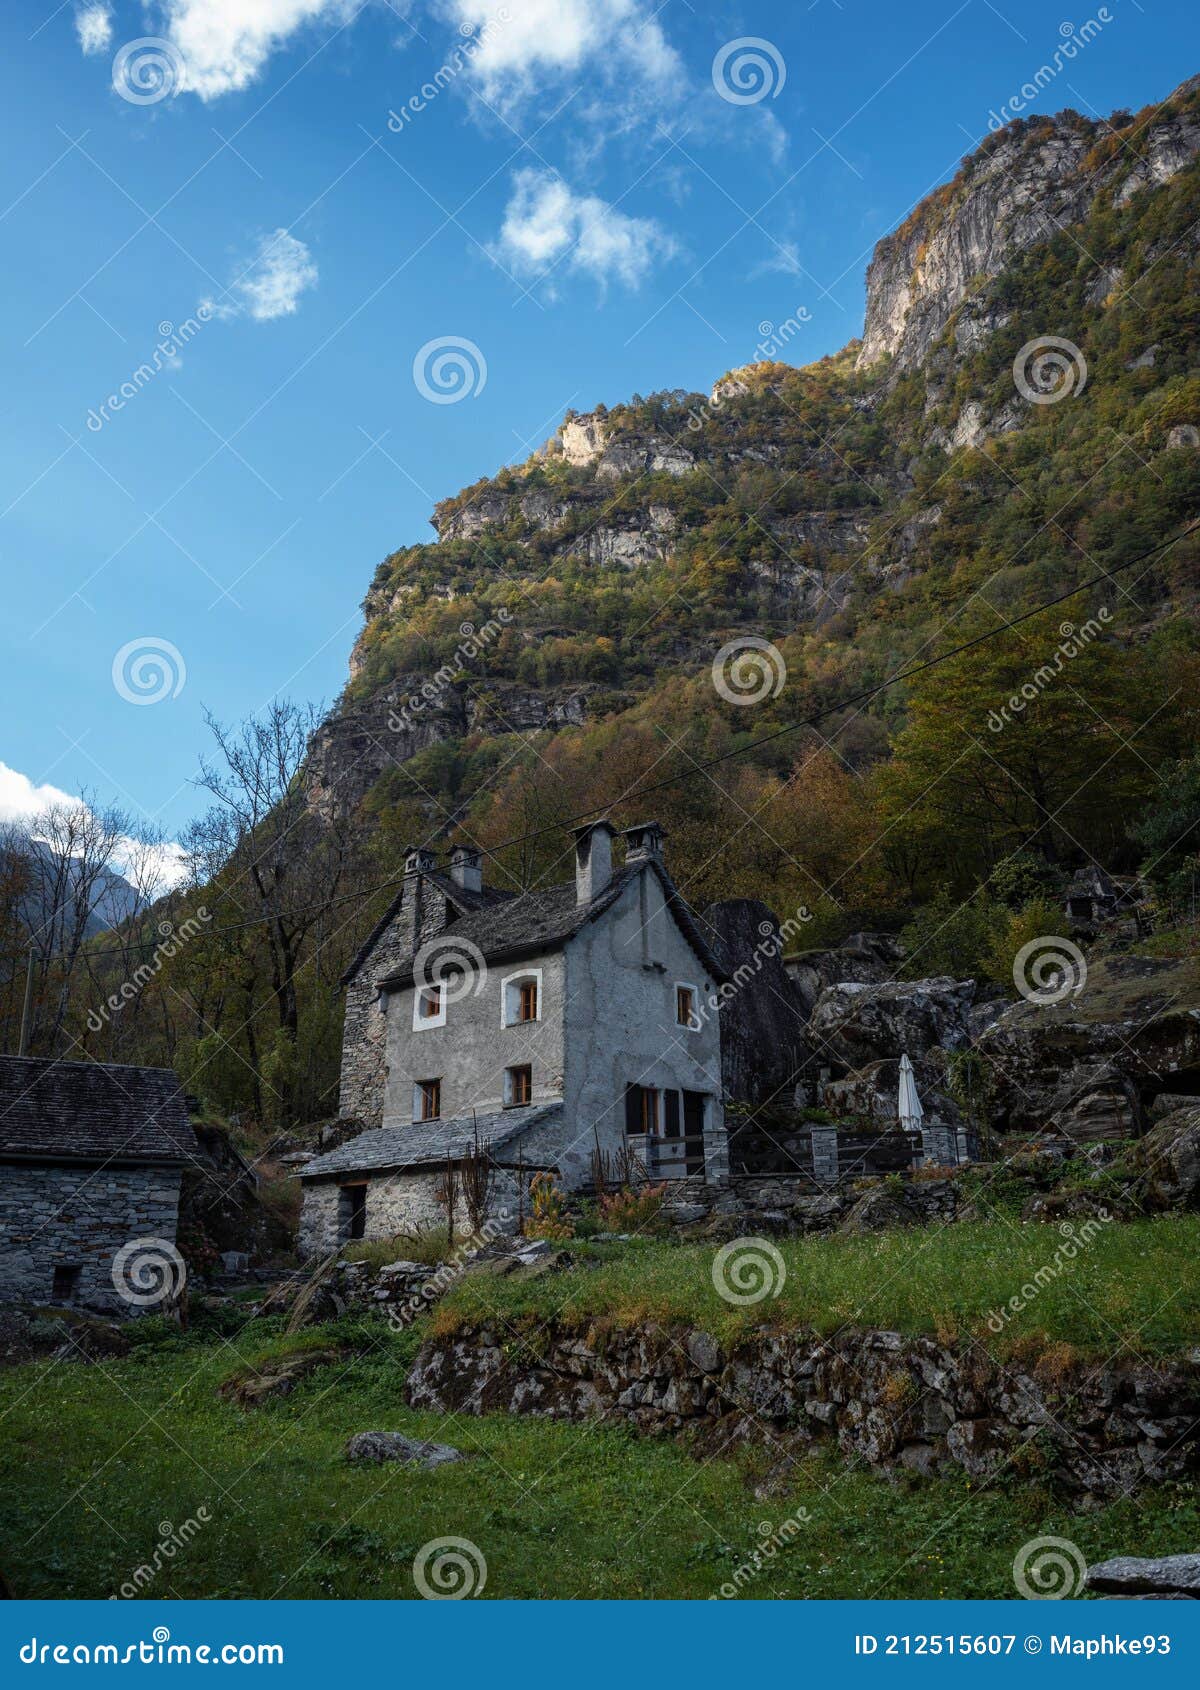 panorama view of charming hamlet ritorto rustico stone rock houses in nature bavona valley ticino switzerland alps